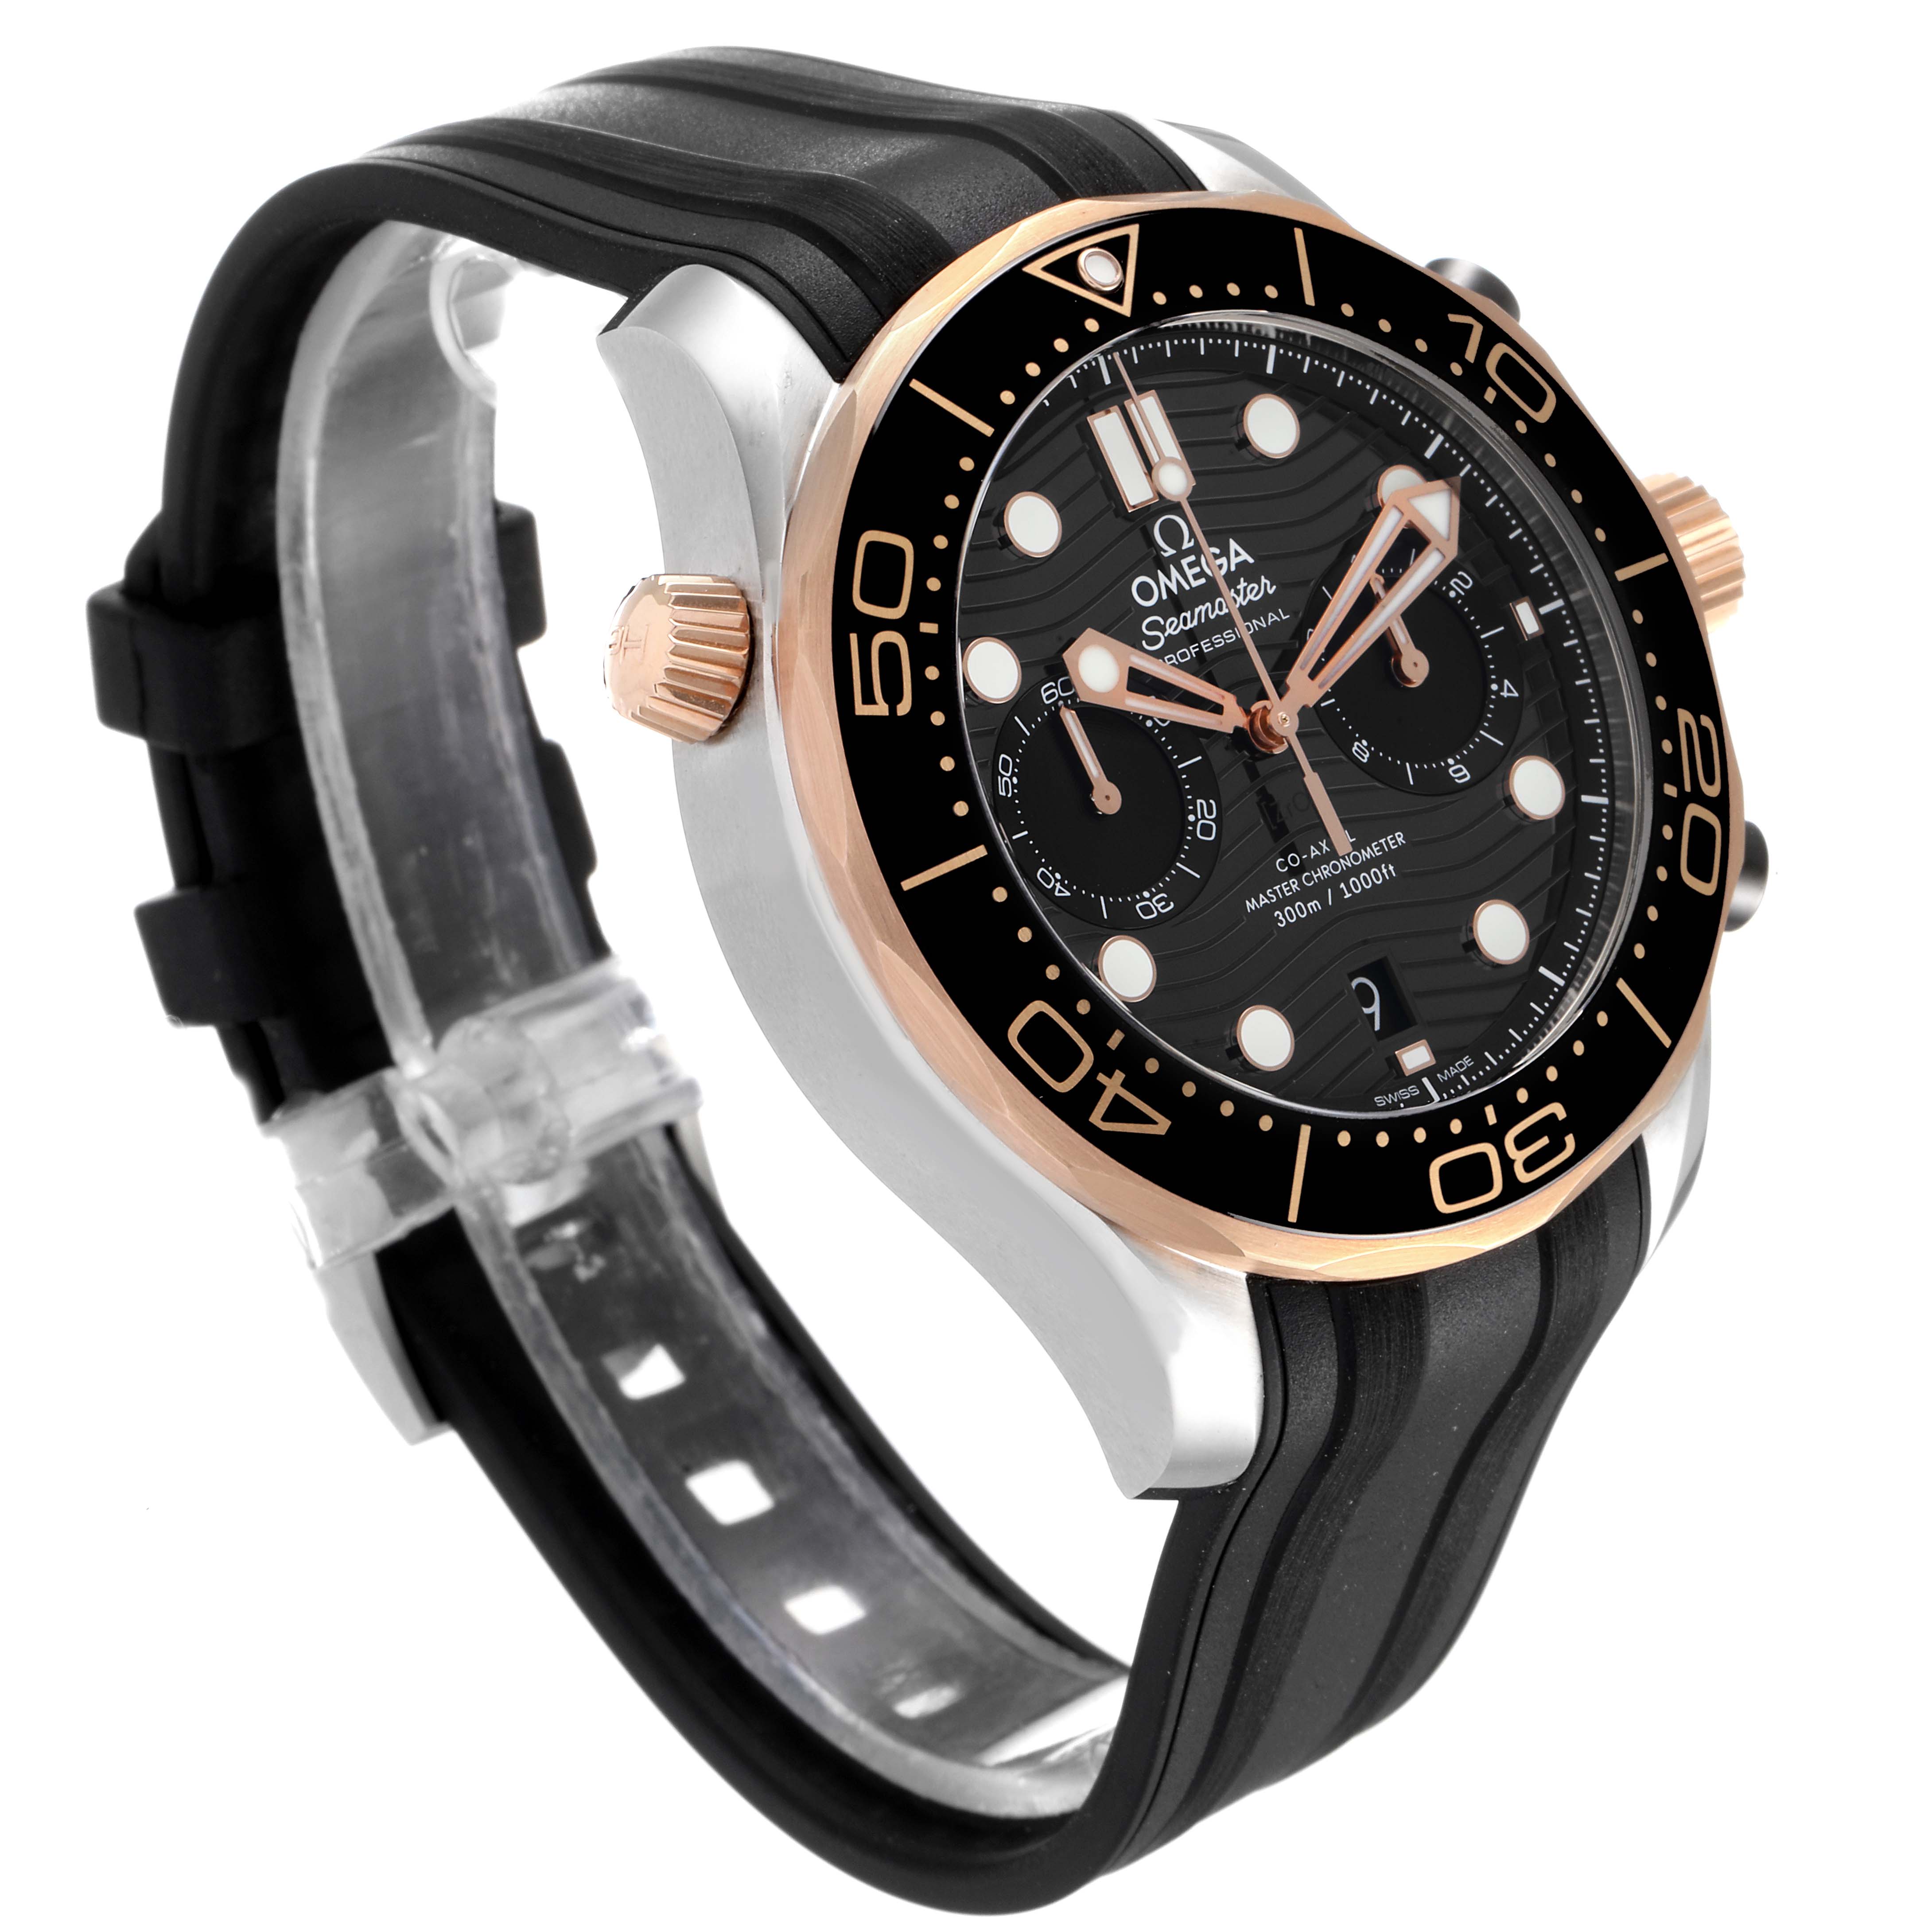 Omega Seamaster Diver Master Chronometer Watch 210.22.44.51.01.001 Box ...